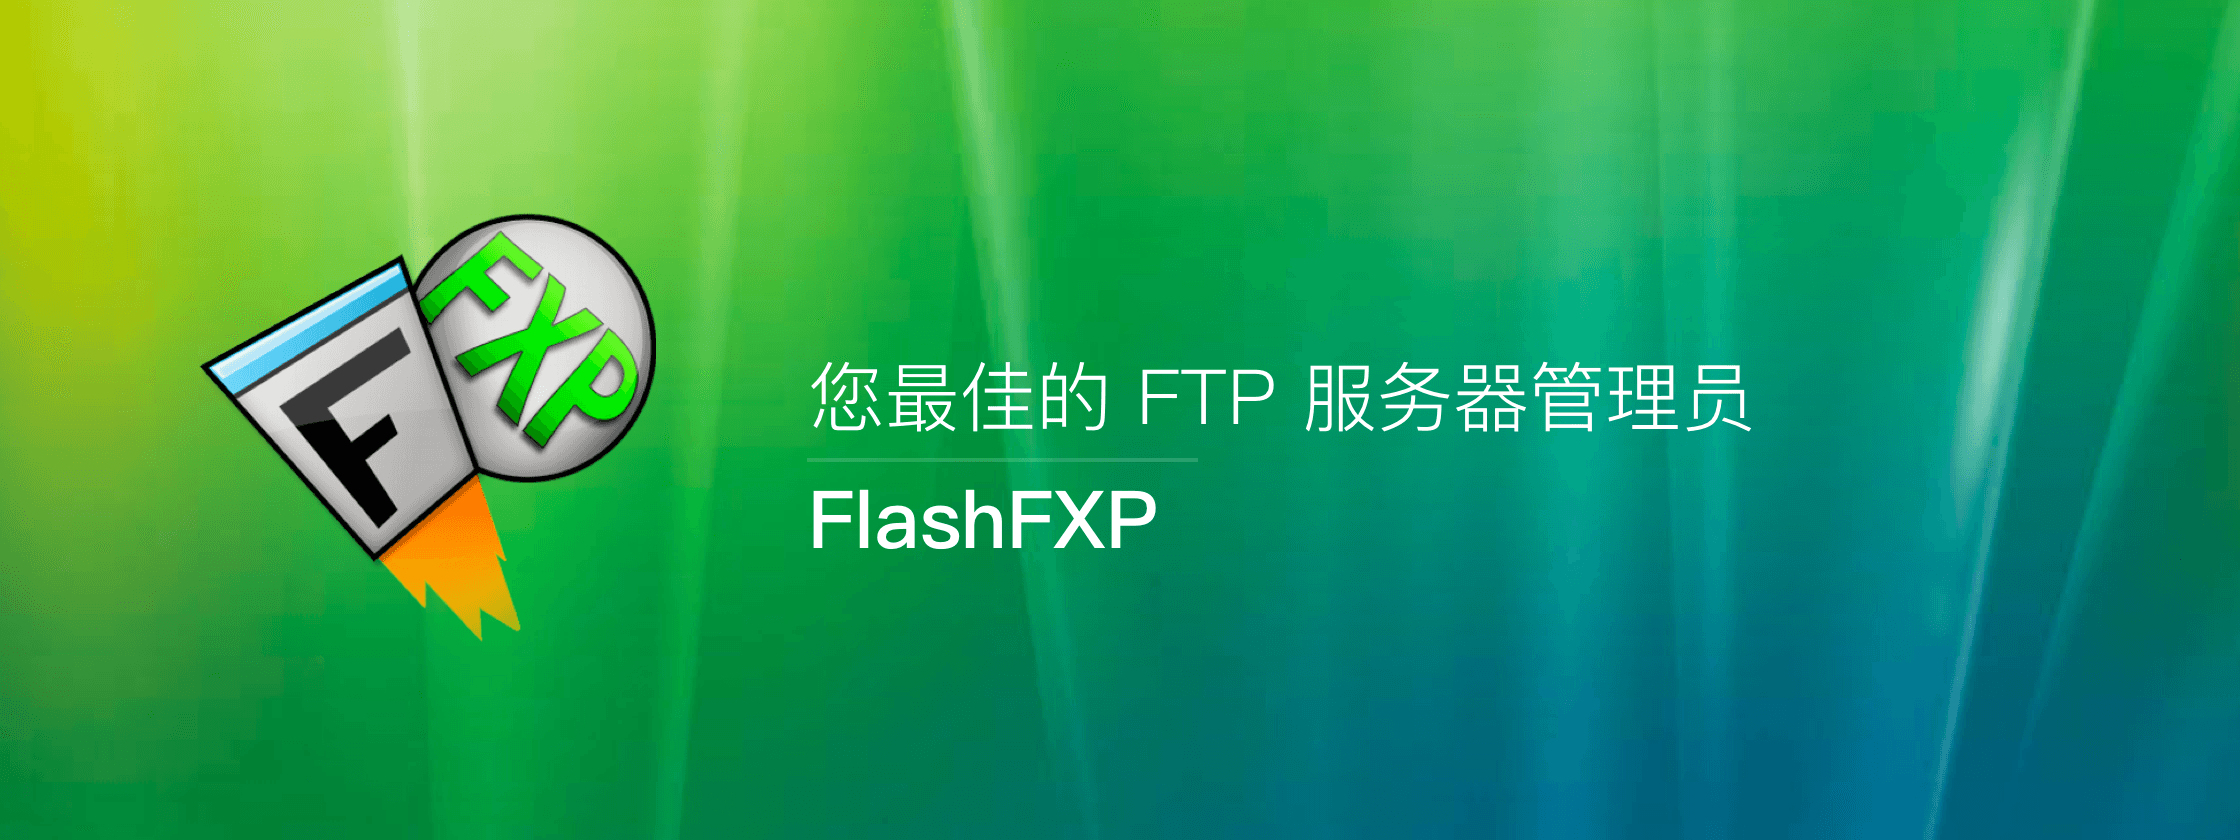 FlashFXP – 您最佳的 FTP 服务器管理员